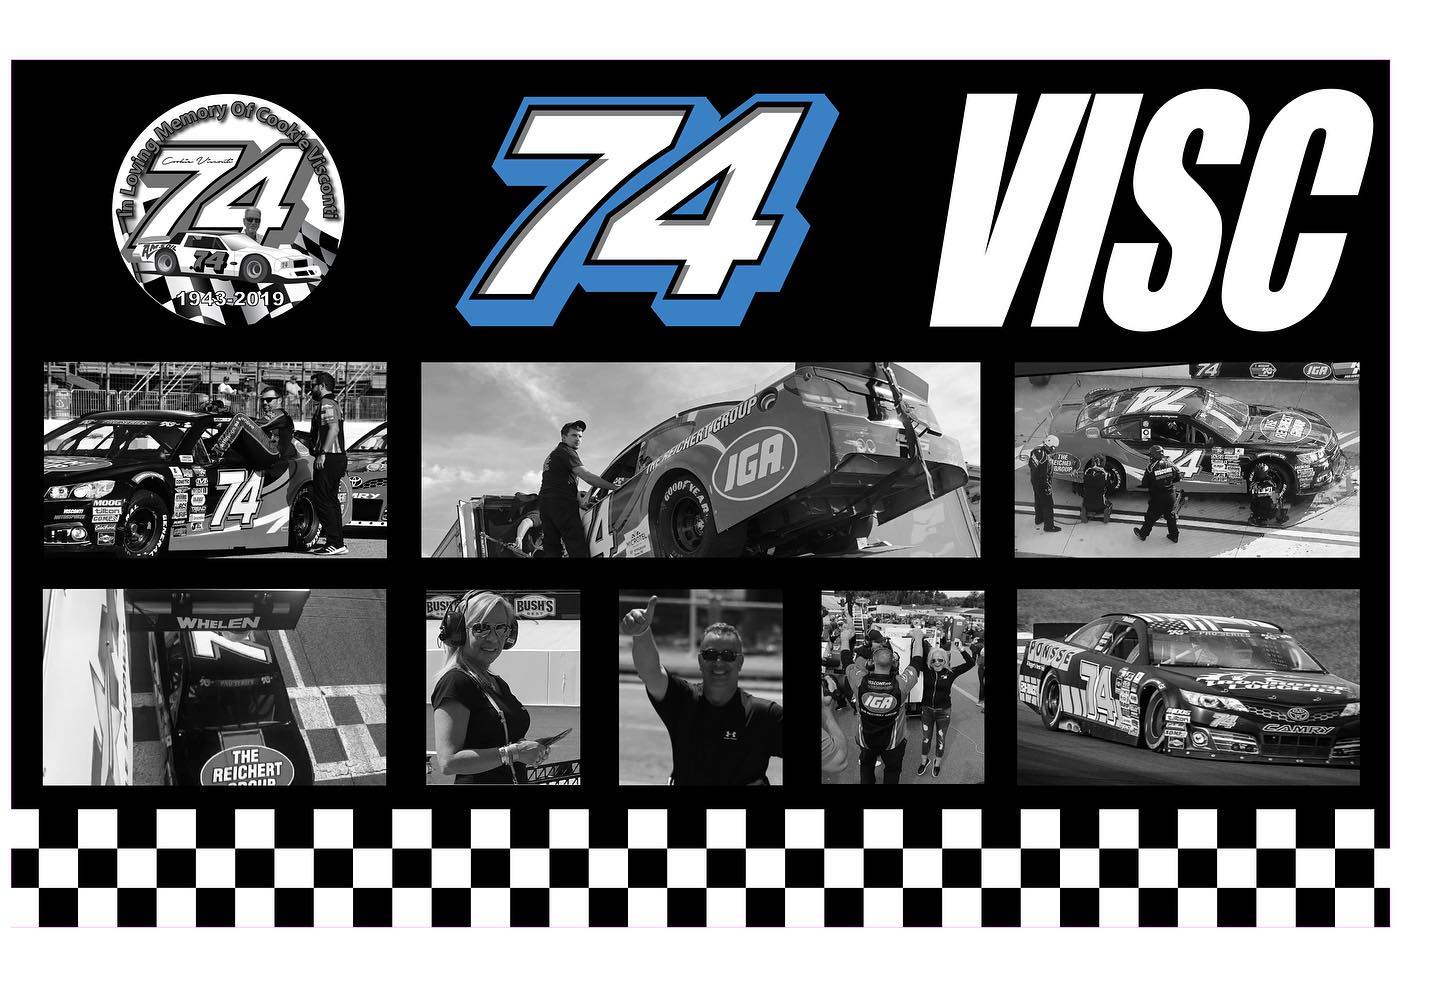 74 Visc Racing Wrap Ellington, Connecticut